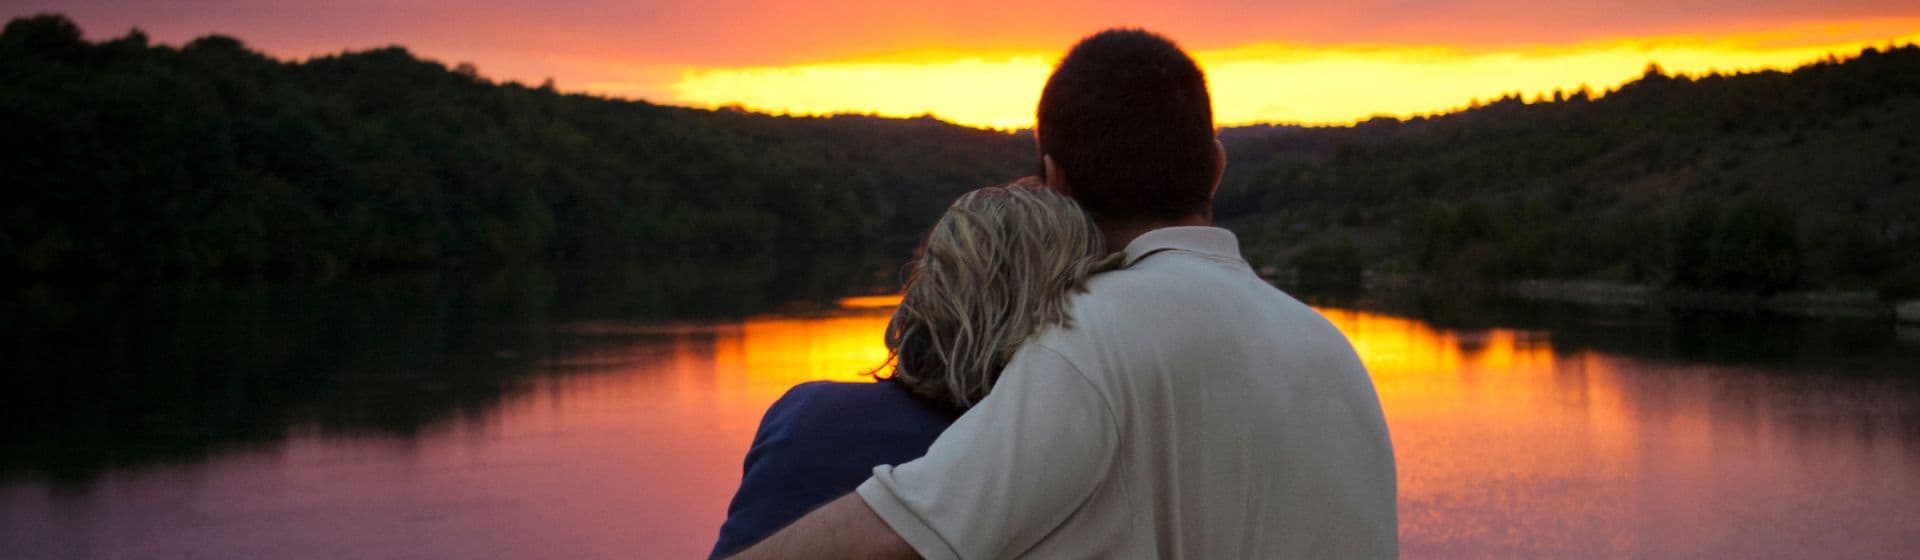 Mann und Frau am See beim Sonnenuntergang